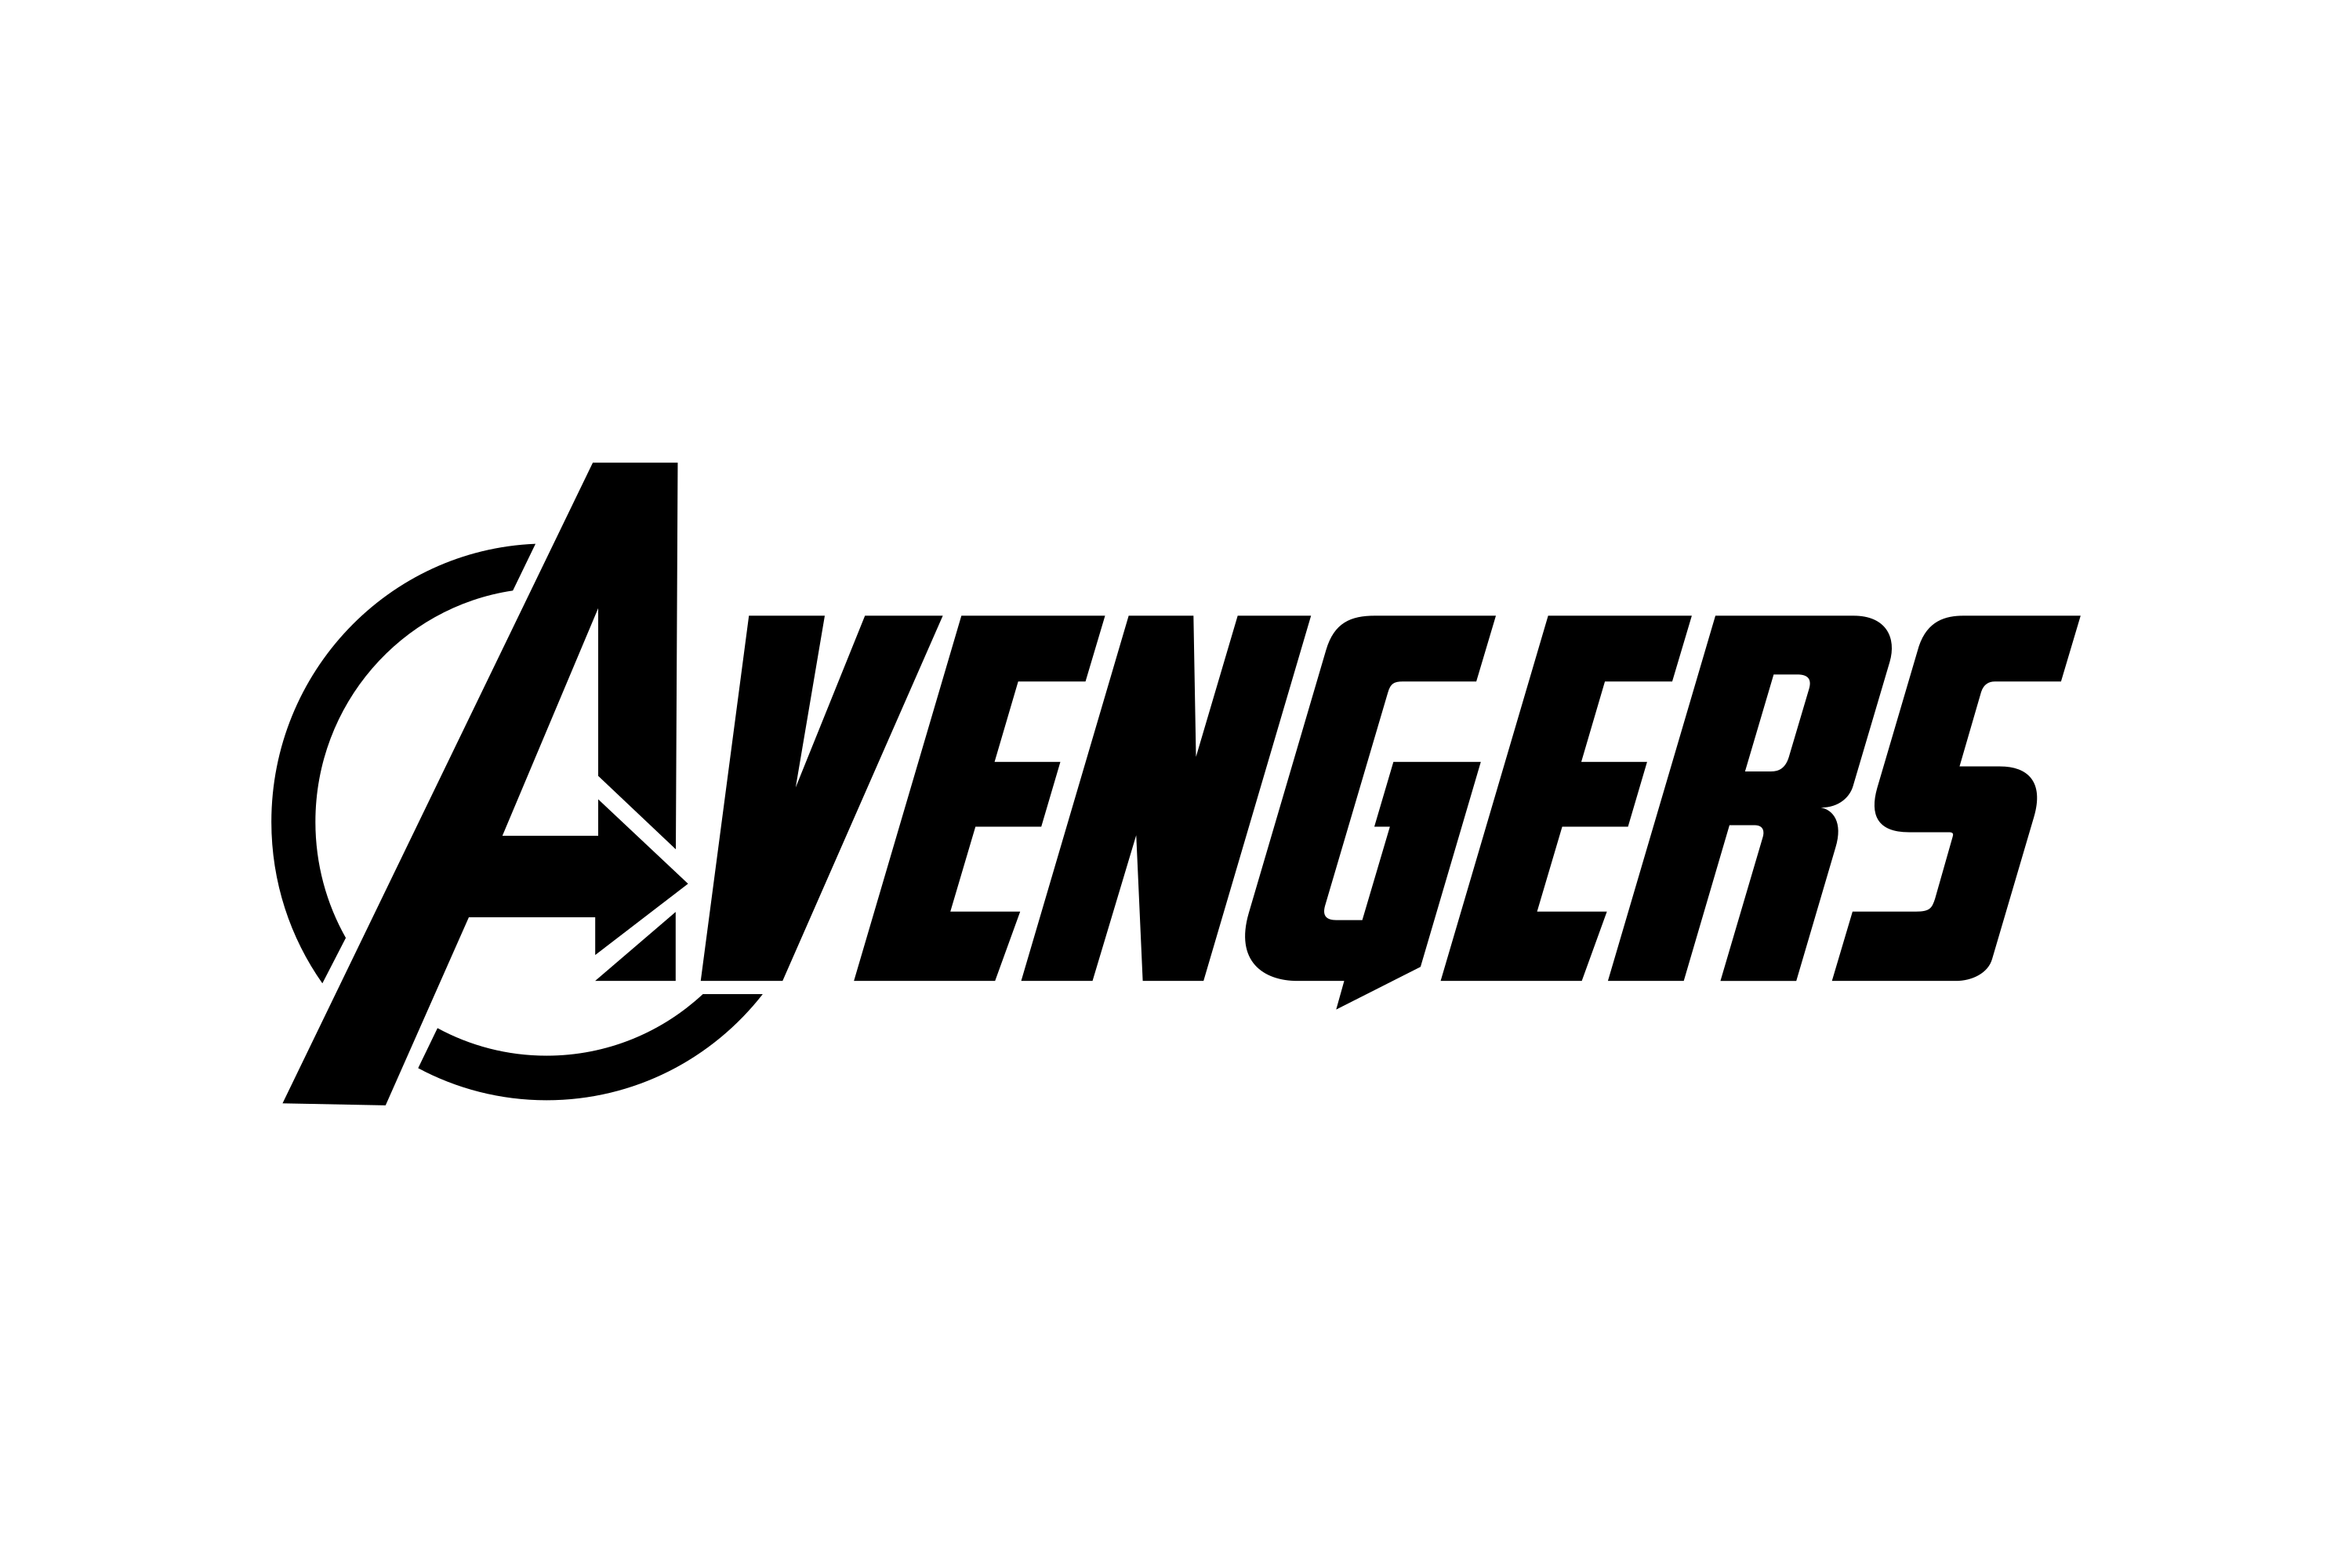 Download Avengers Logo in SVG Vector or PNG File Format - Logo.wine